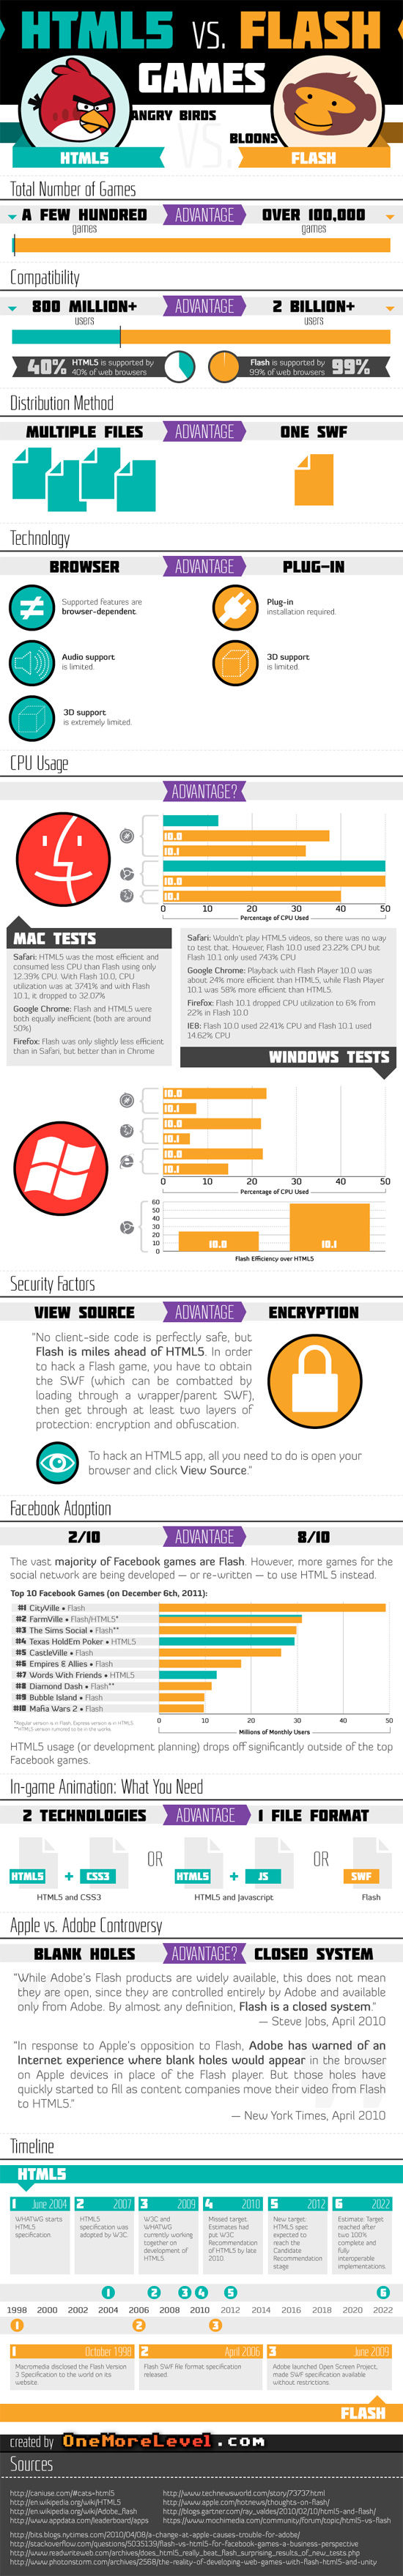 Infographic: HTML5 vs Flash Games